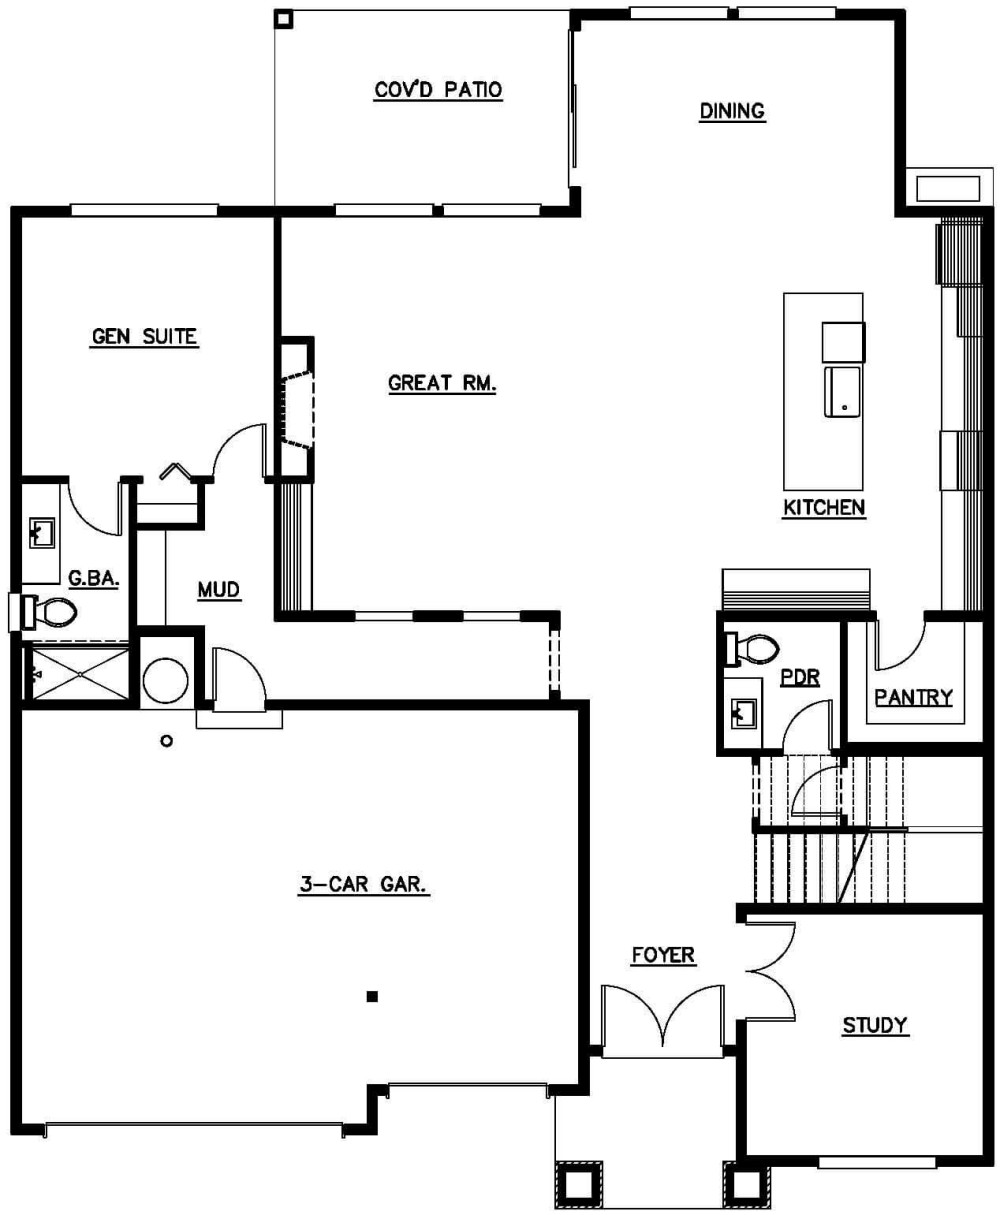 Main Floor Plan floorplan for the Pendrell - Lot 3 home